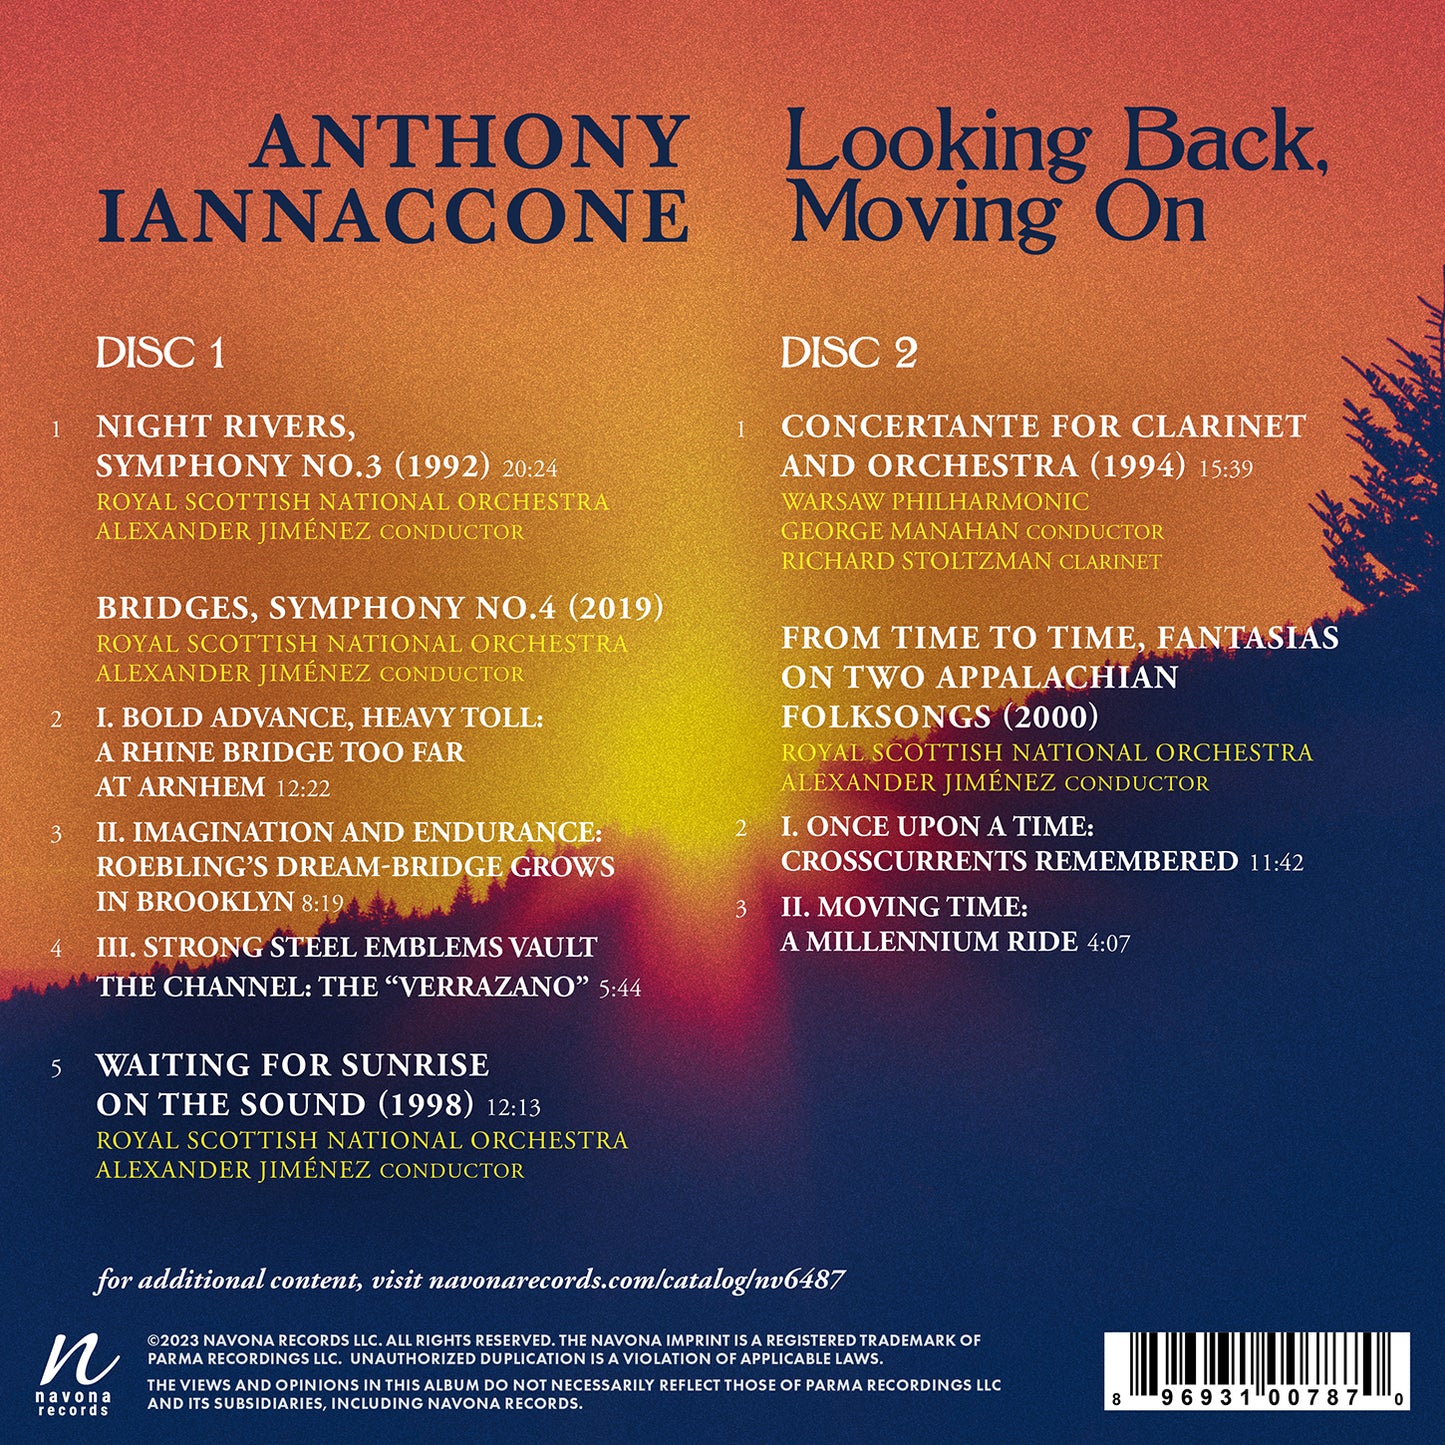 Iannaccone: Looking Back, Moving On